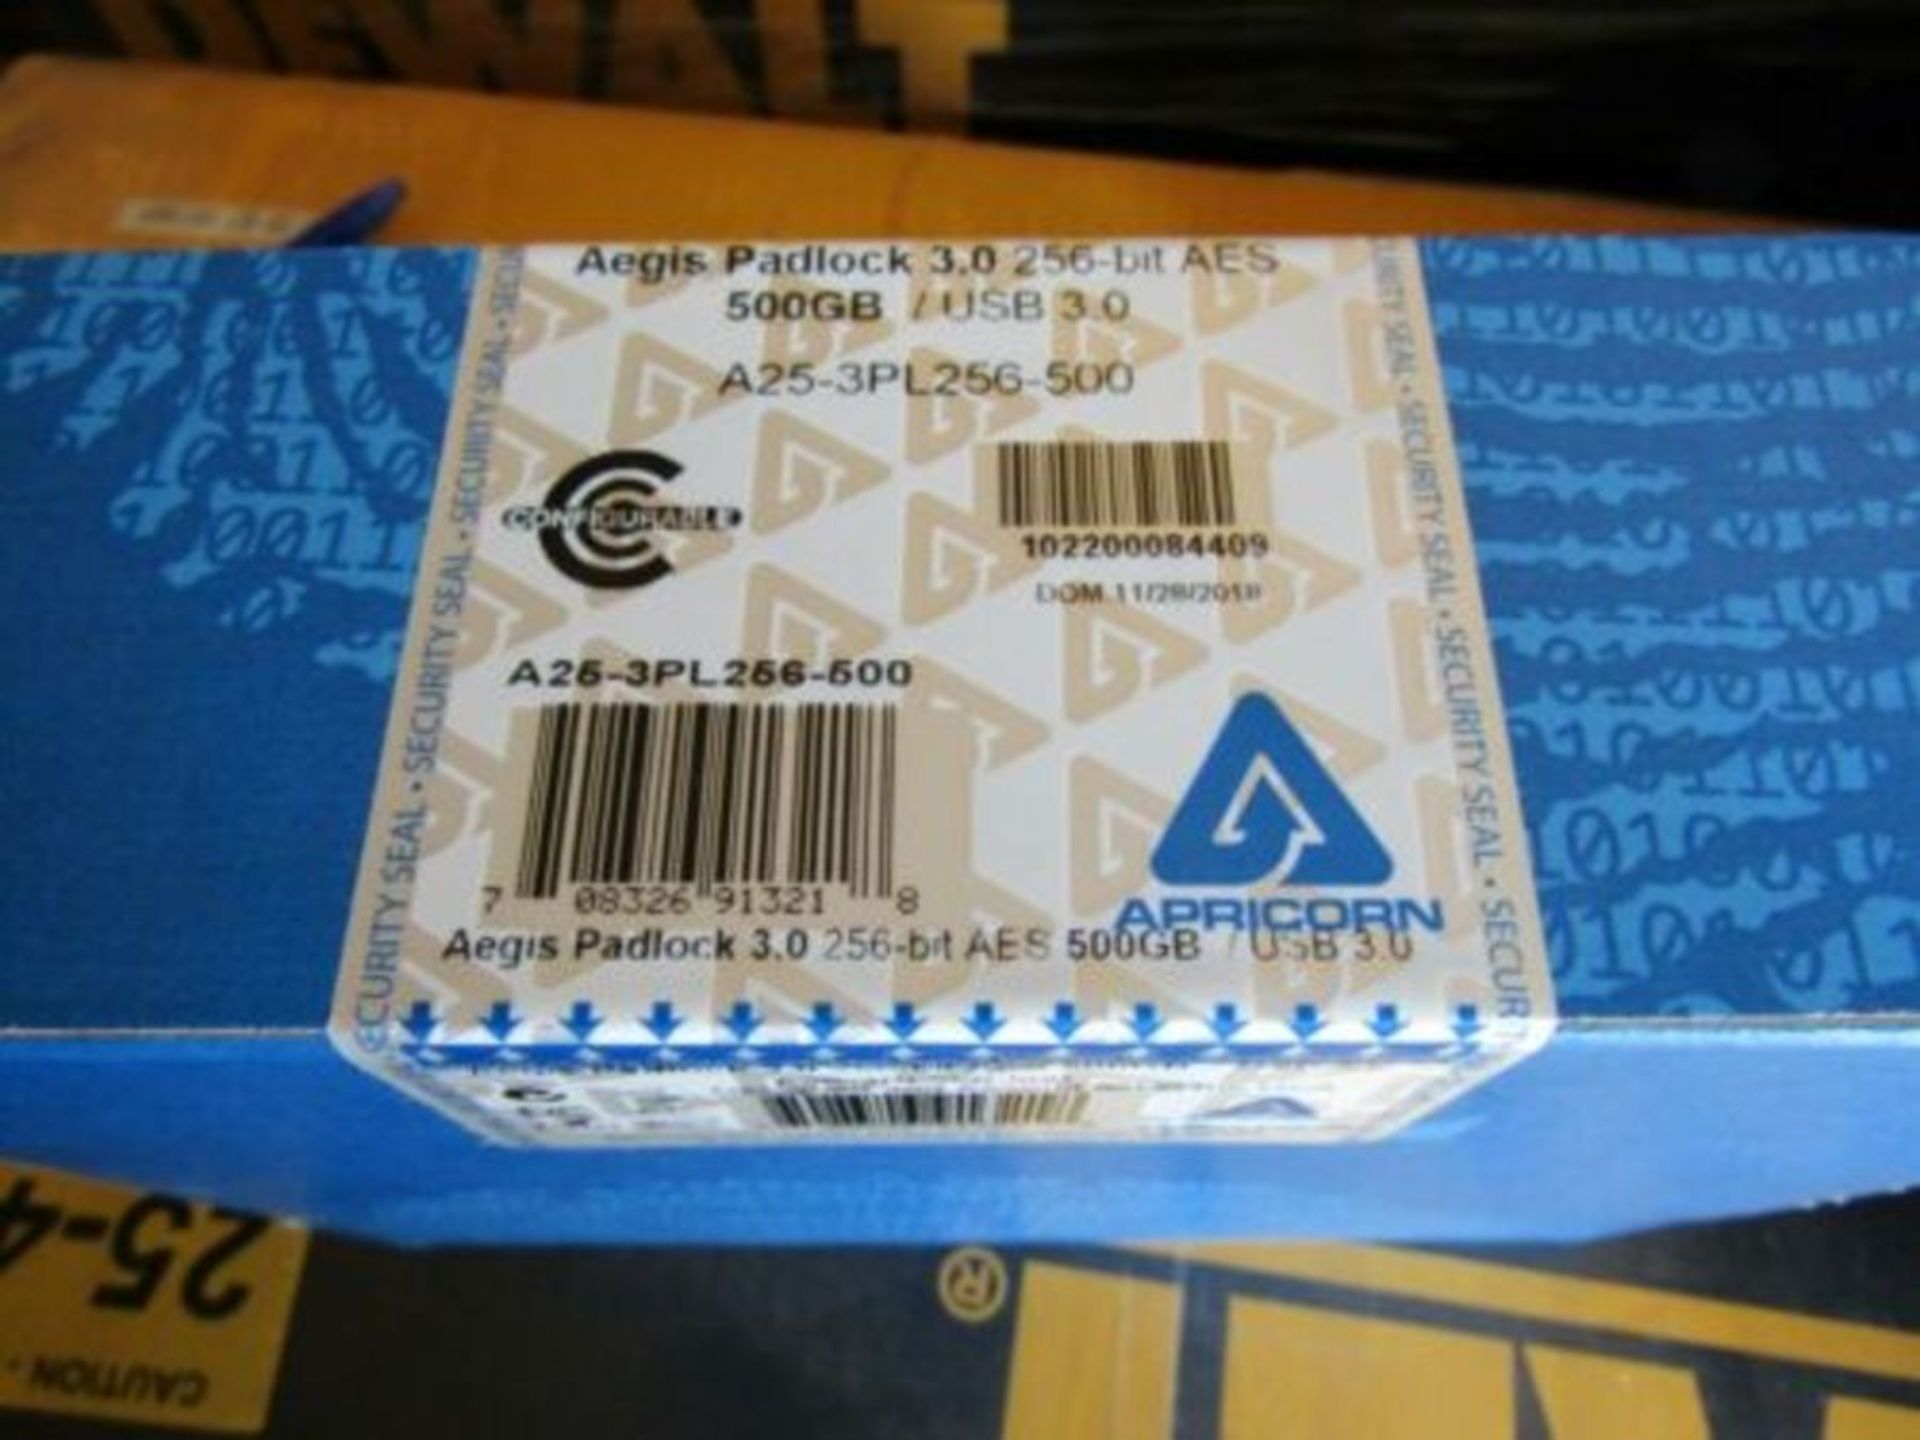 5 x Apricorn Aegis Bio 3 500 GB Portable Hard Drive A25-3PL256-500 £120 each on ebay BL1 1465560 - Image 2 of 4